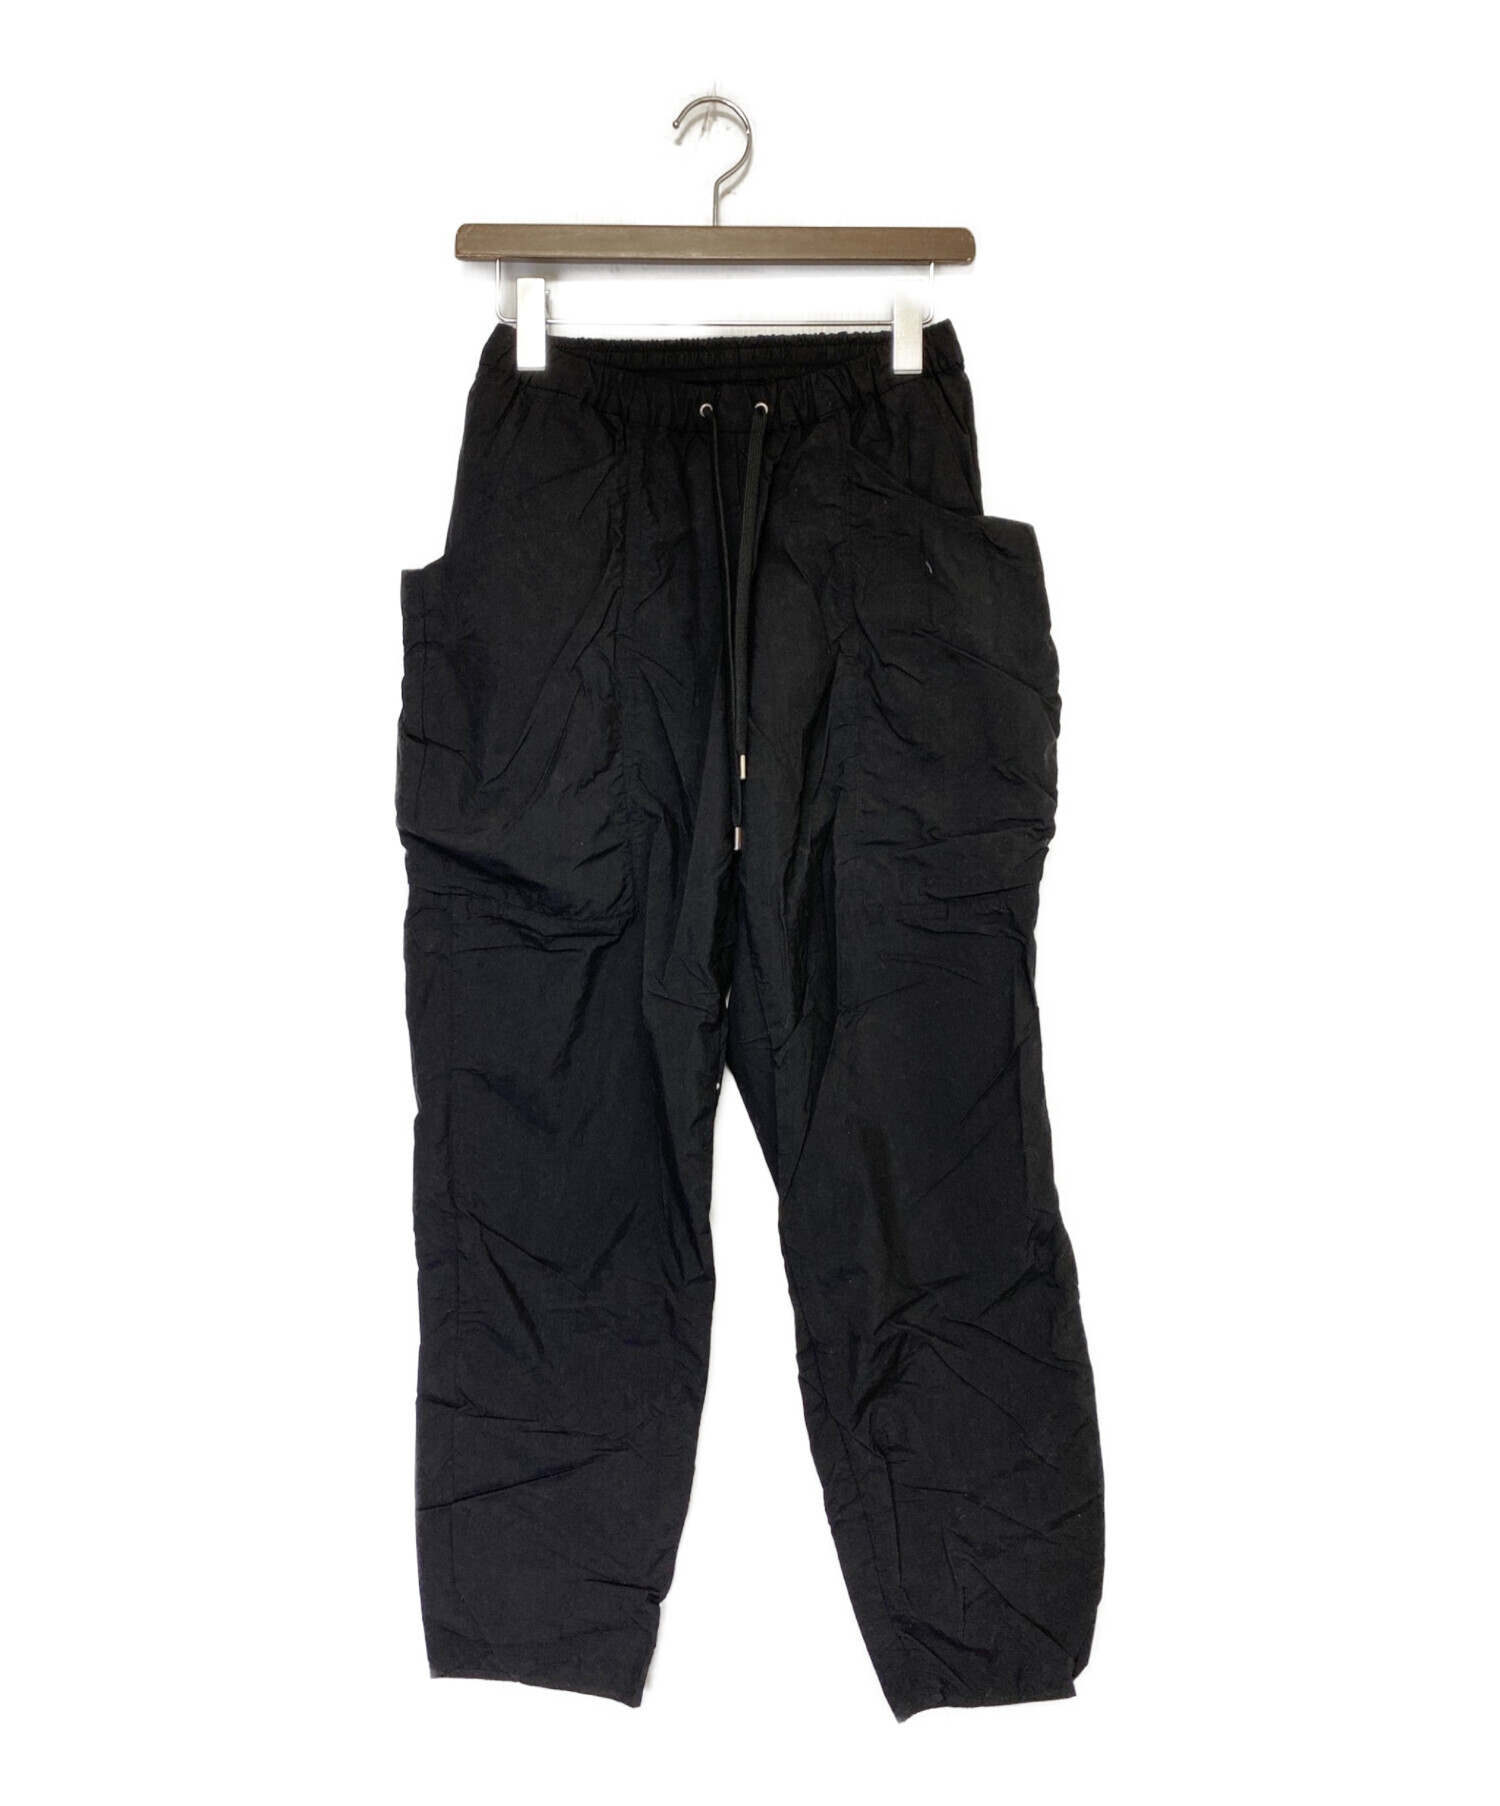 teatora (テアトラ) Wallet Pants Packable ブラック サイズ:SIZE 46